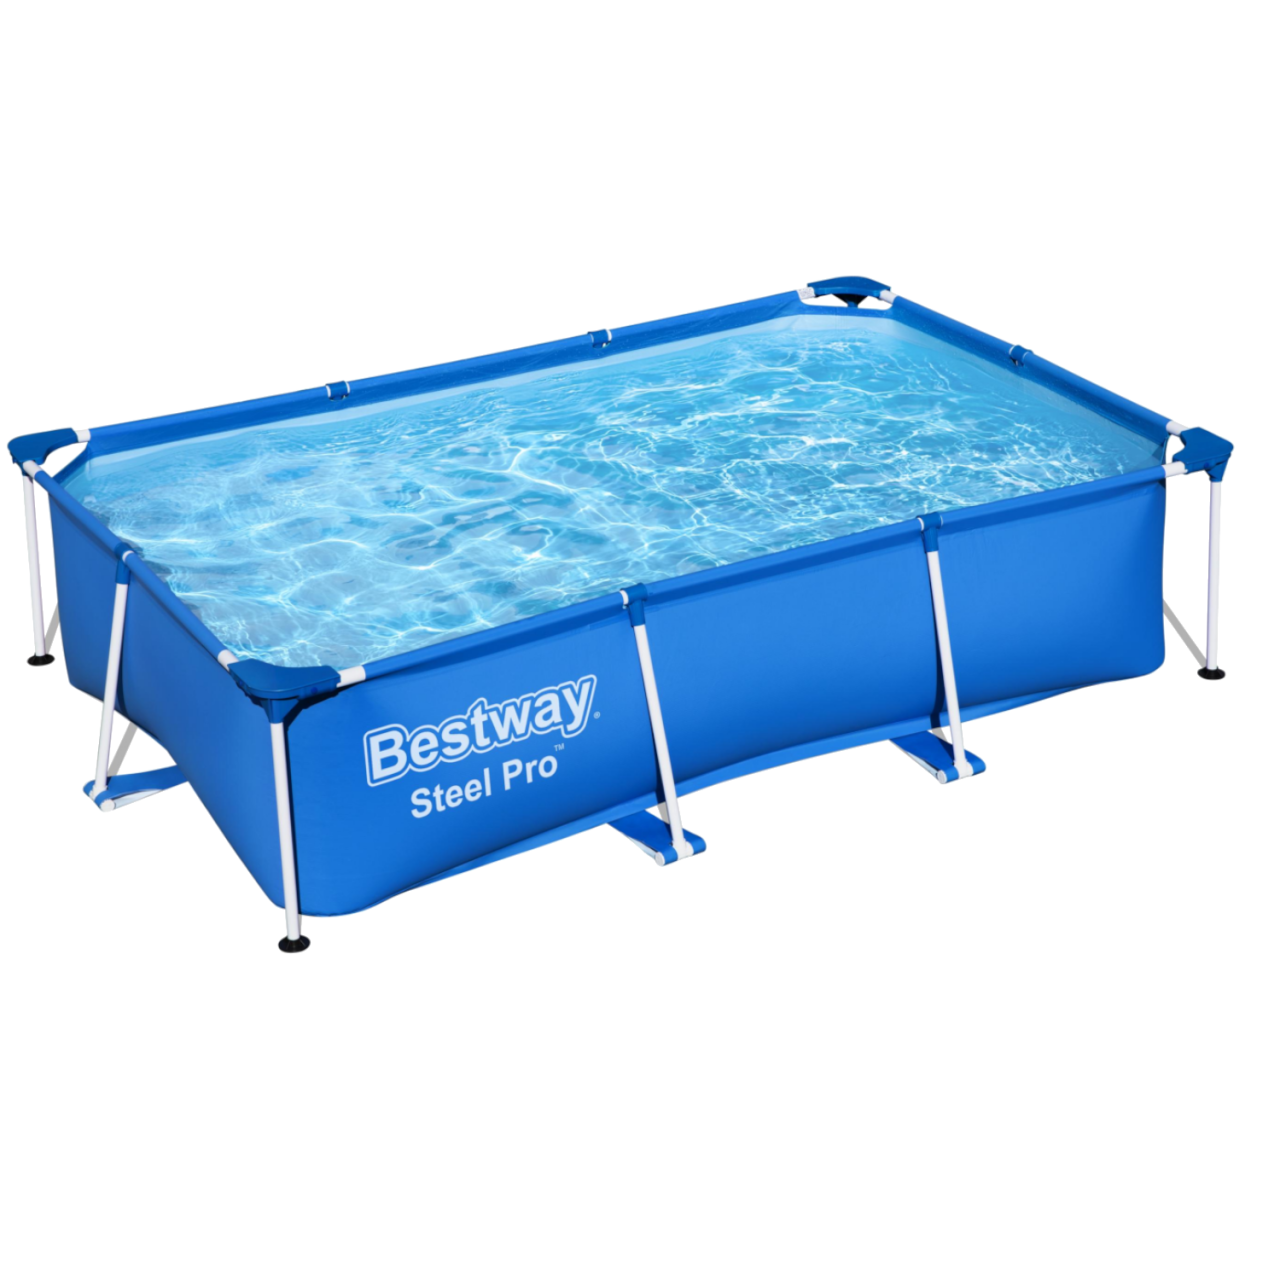 Bestway 56403 Steel Pro Frame Pool rechteckig 259x170x61cm Swimmingpool Family